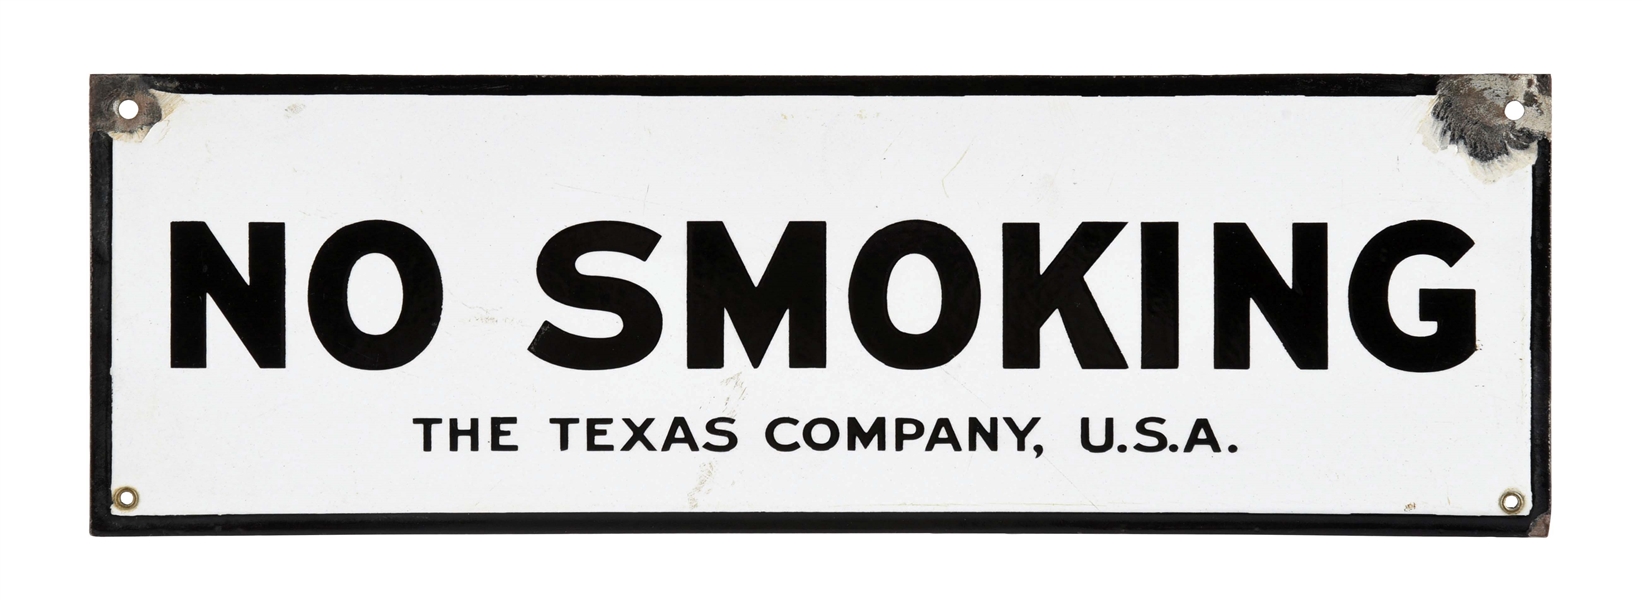 TEXACO NO SMOKING PORCELAIN SERVICE STATION SIGN.